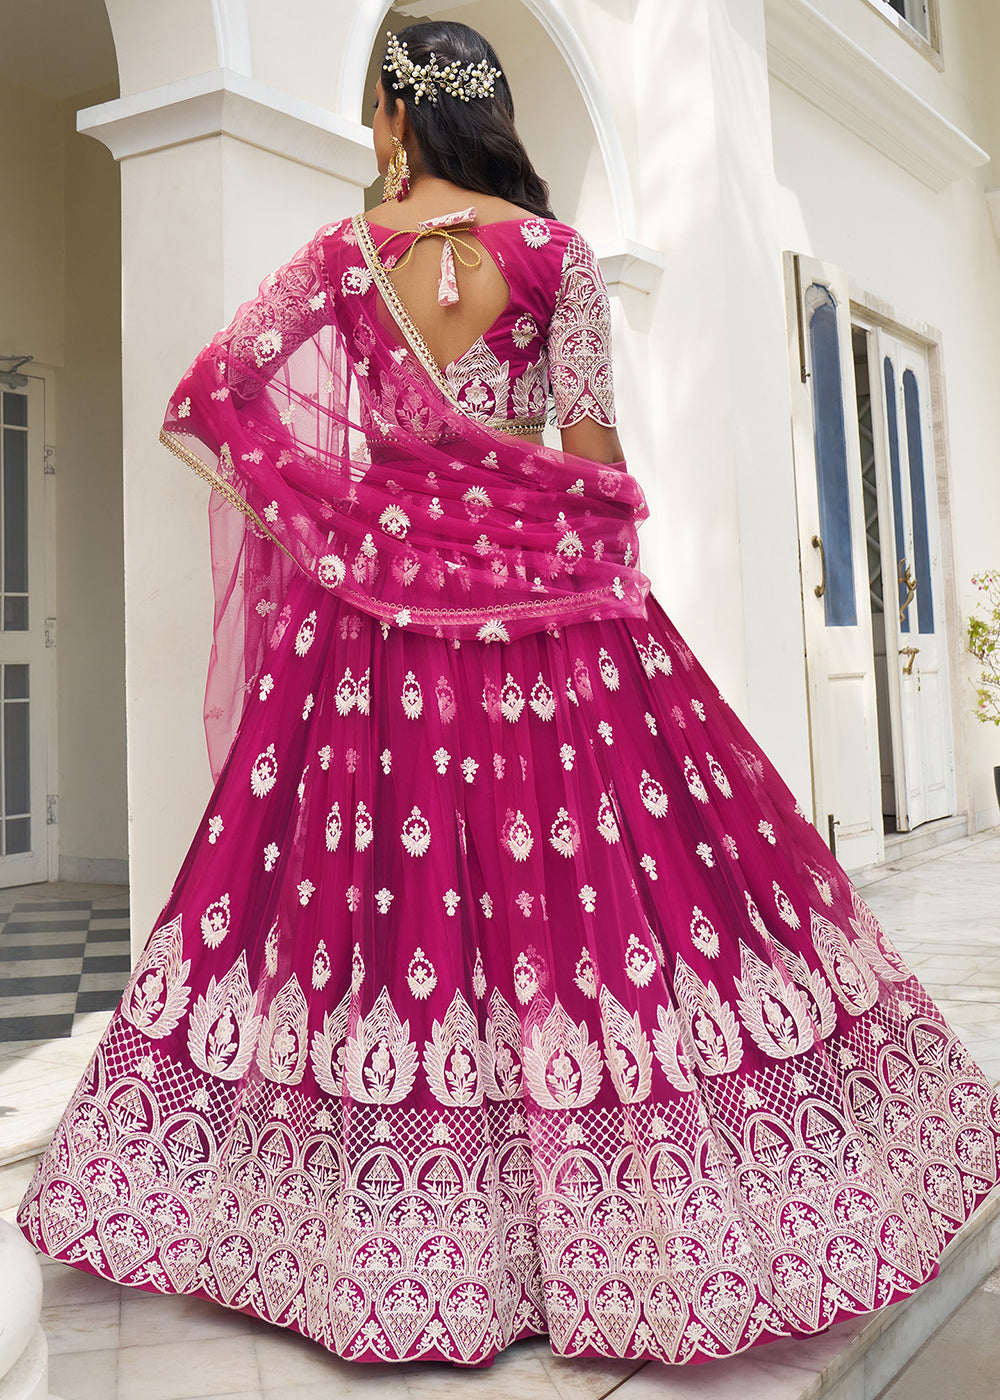 Buy Now Dark Pink Net Embroidered Wedding Lehenga Choli Online in USA, UK, Canada & Worldwide at Empress Clothing. 